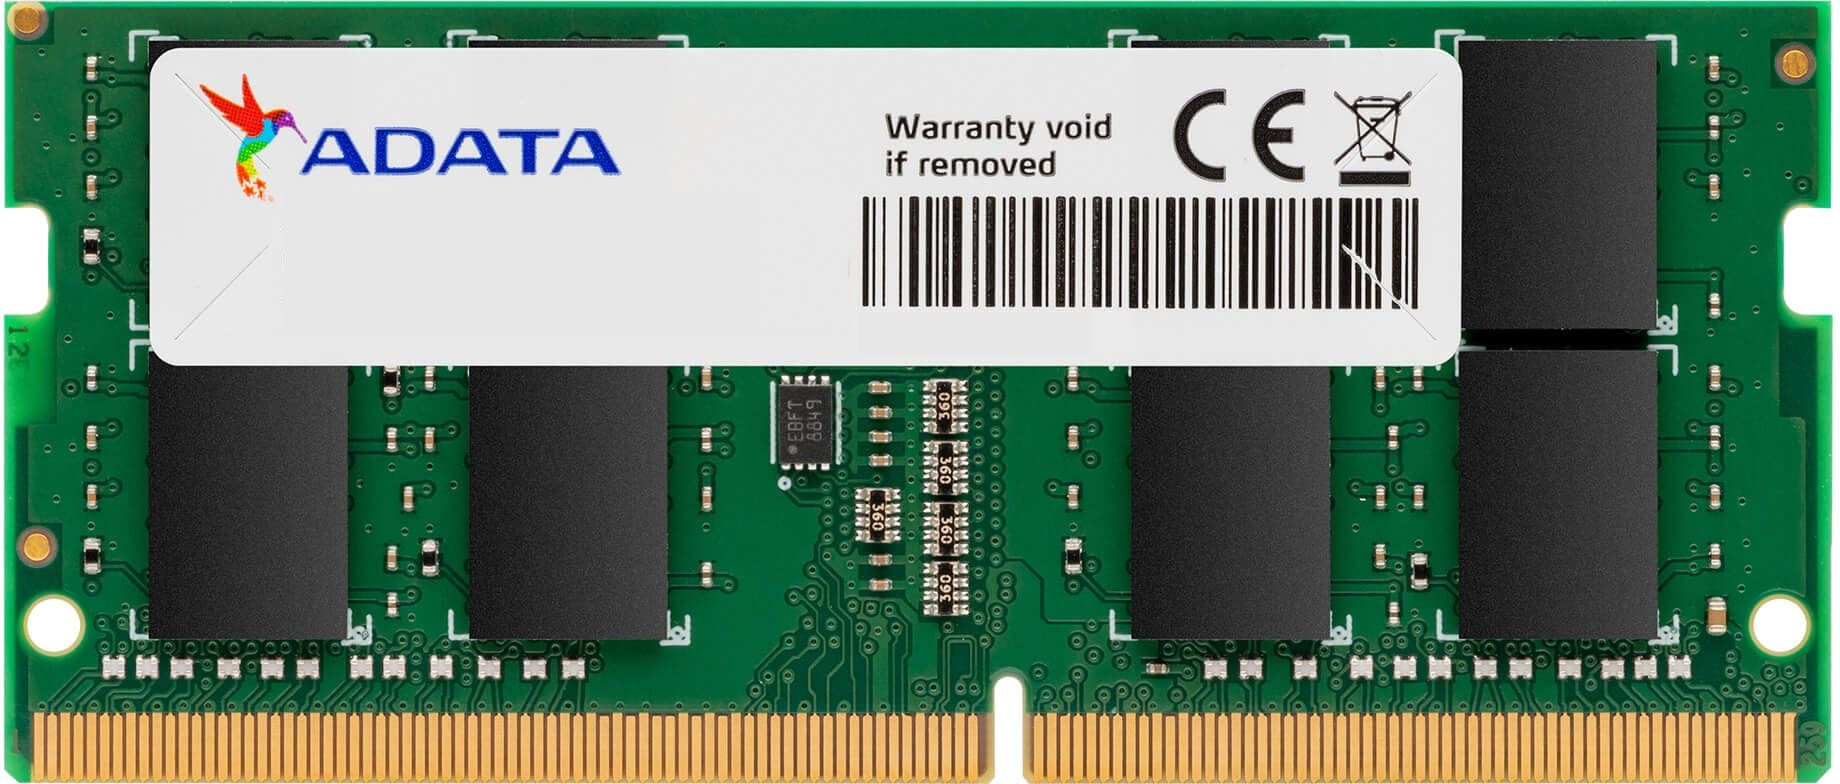 Модуль памяти A-Data Premier AD4S32008G22-RGN DDR4 -  8ГБ 3200, SO-DIMM,  Ret